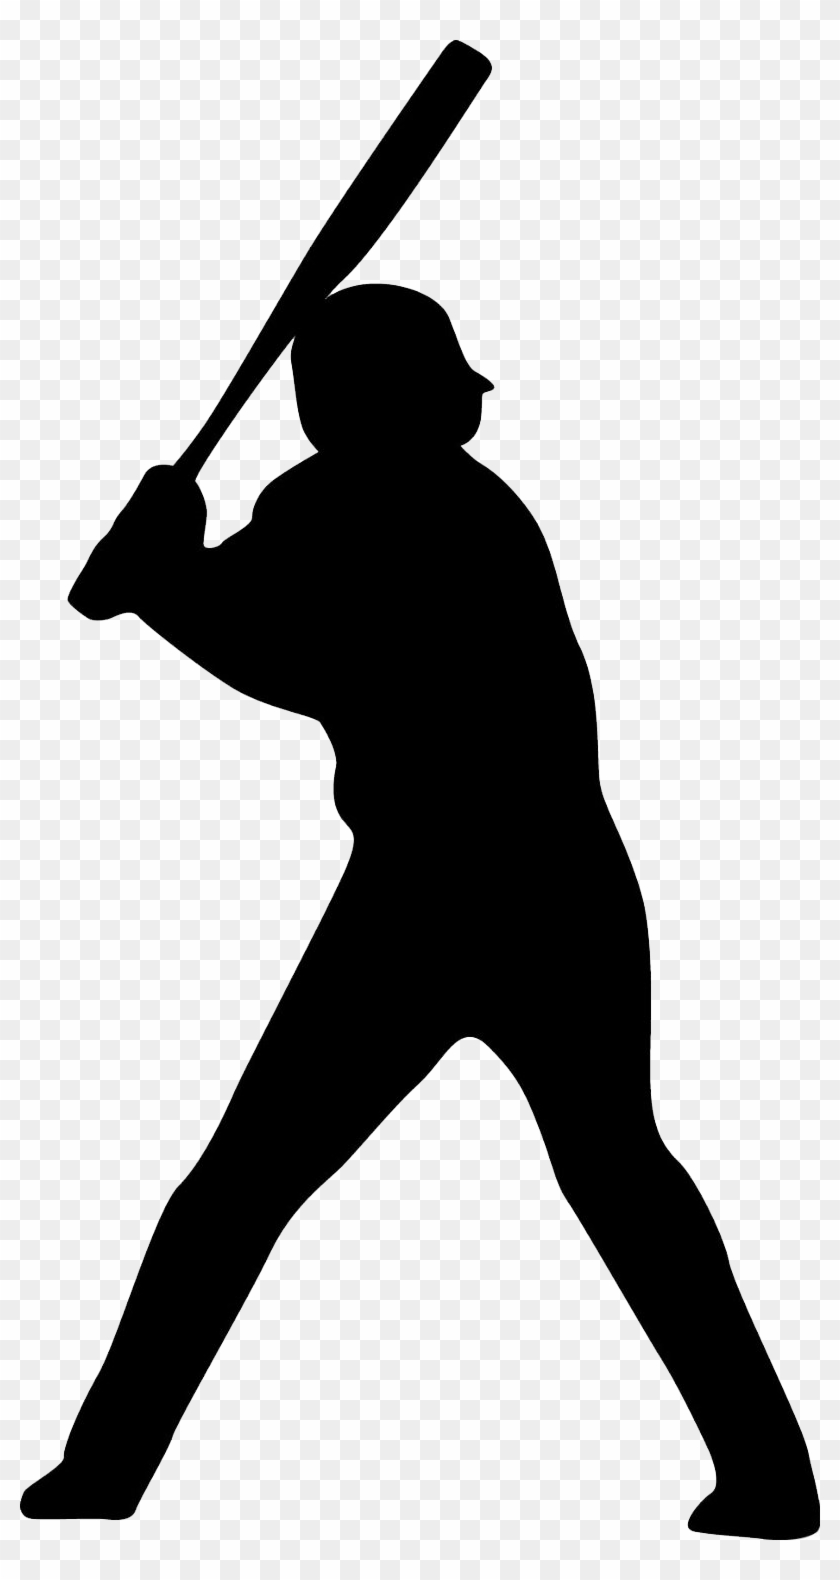 Baseball Player Icon - Baseball Player Silhouette Clipart #50030